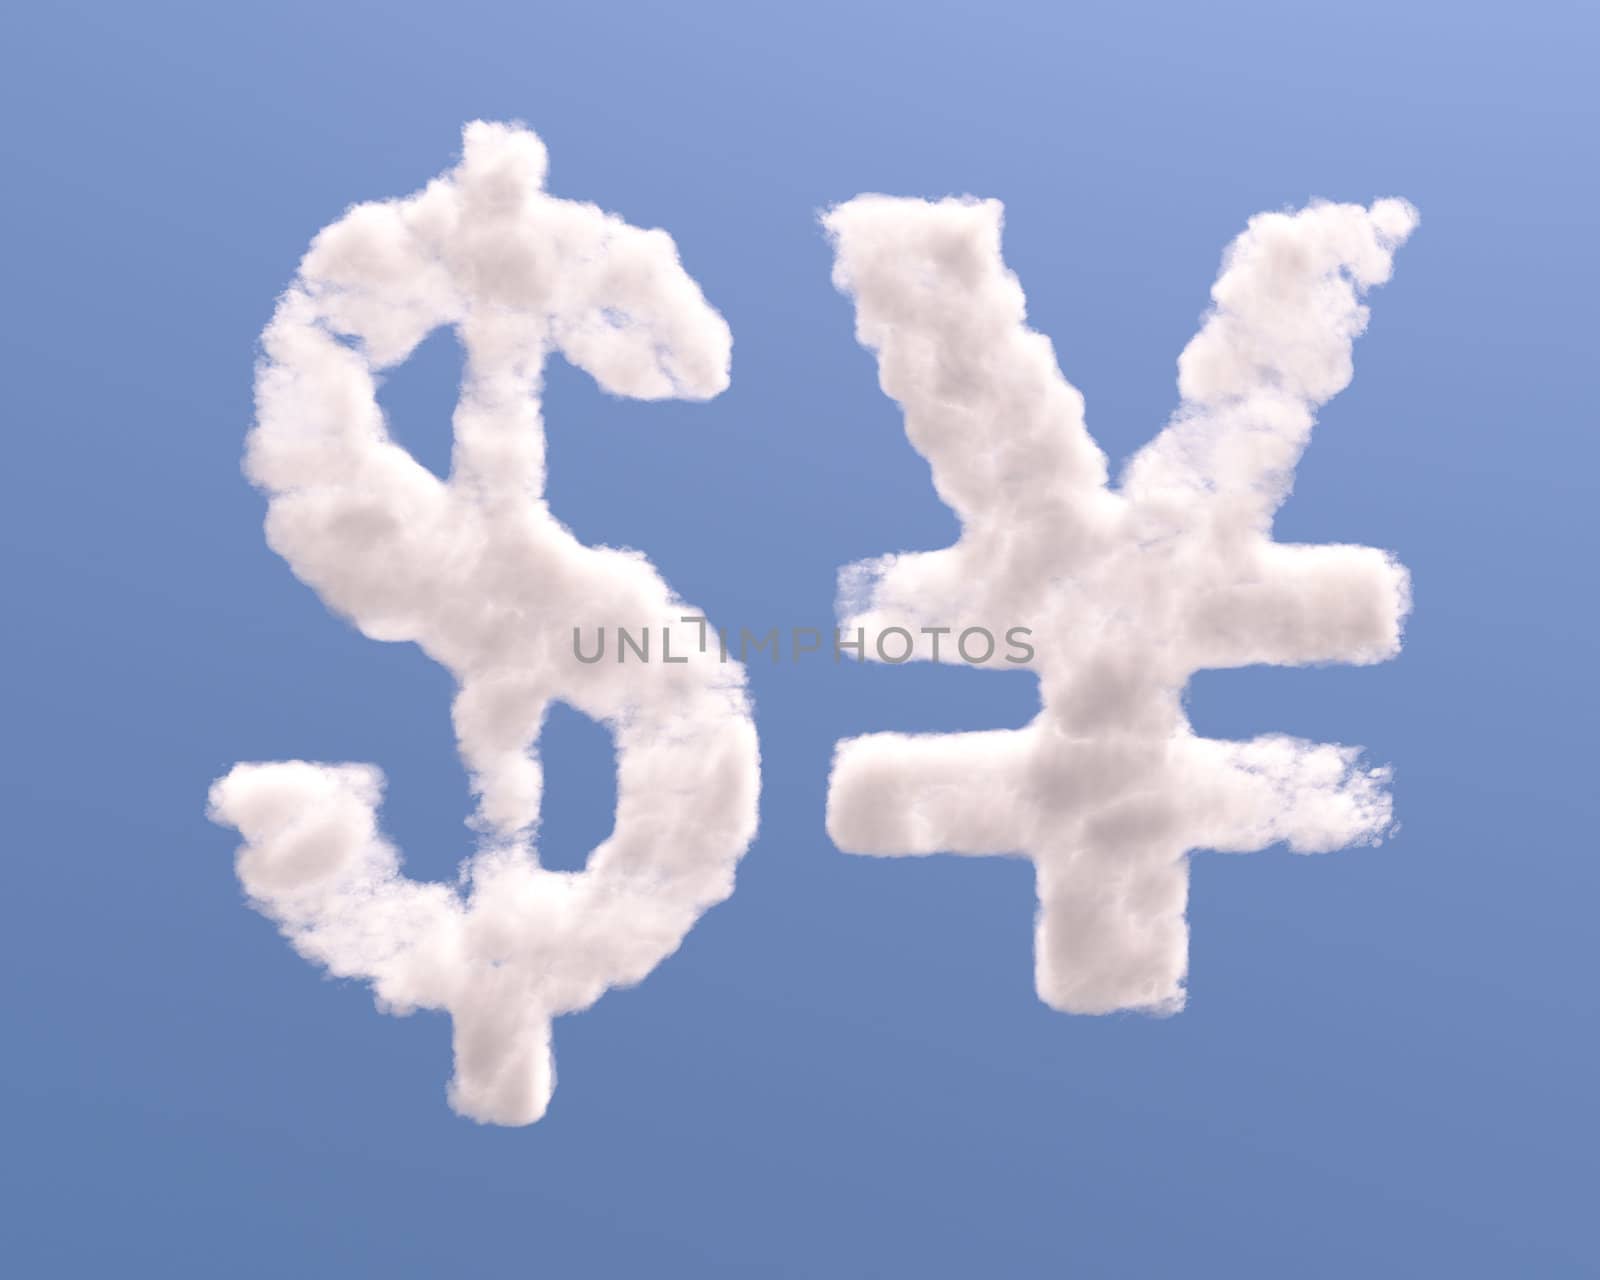 Dollar and yen shape clouds by Zelfit